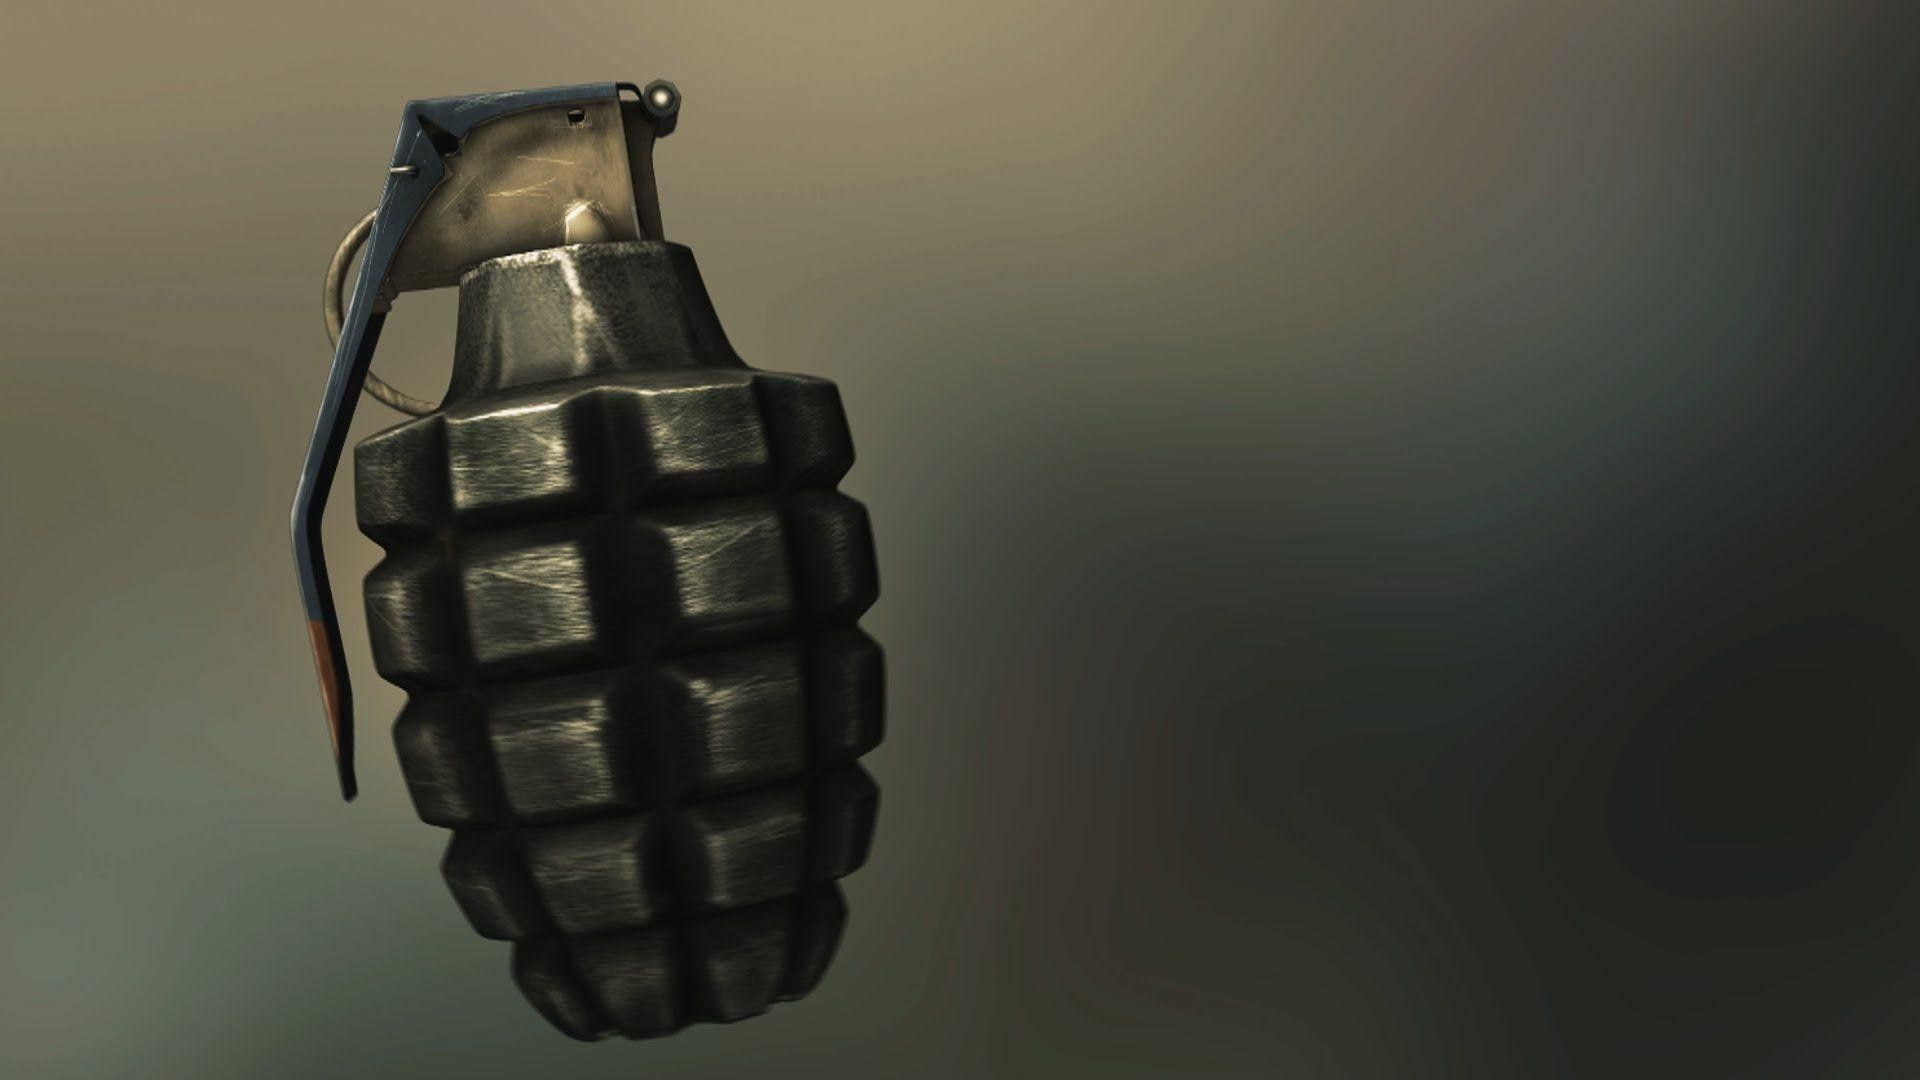 Grenade Wallpaper (best Grenade Wallpaper and image) on WallpaperChat